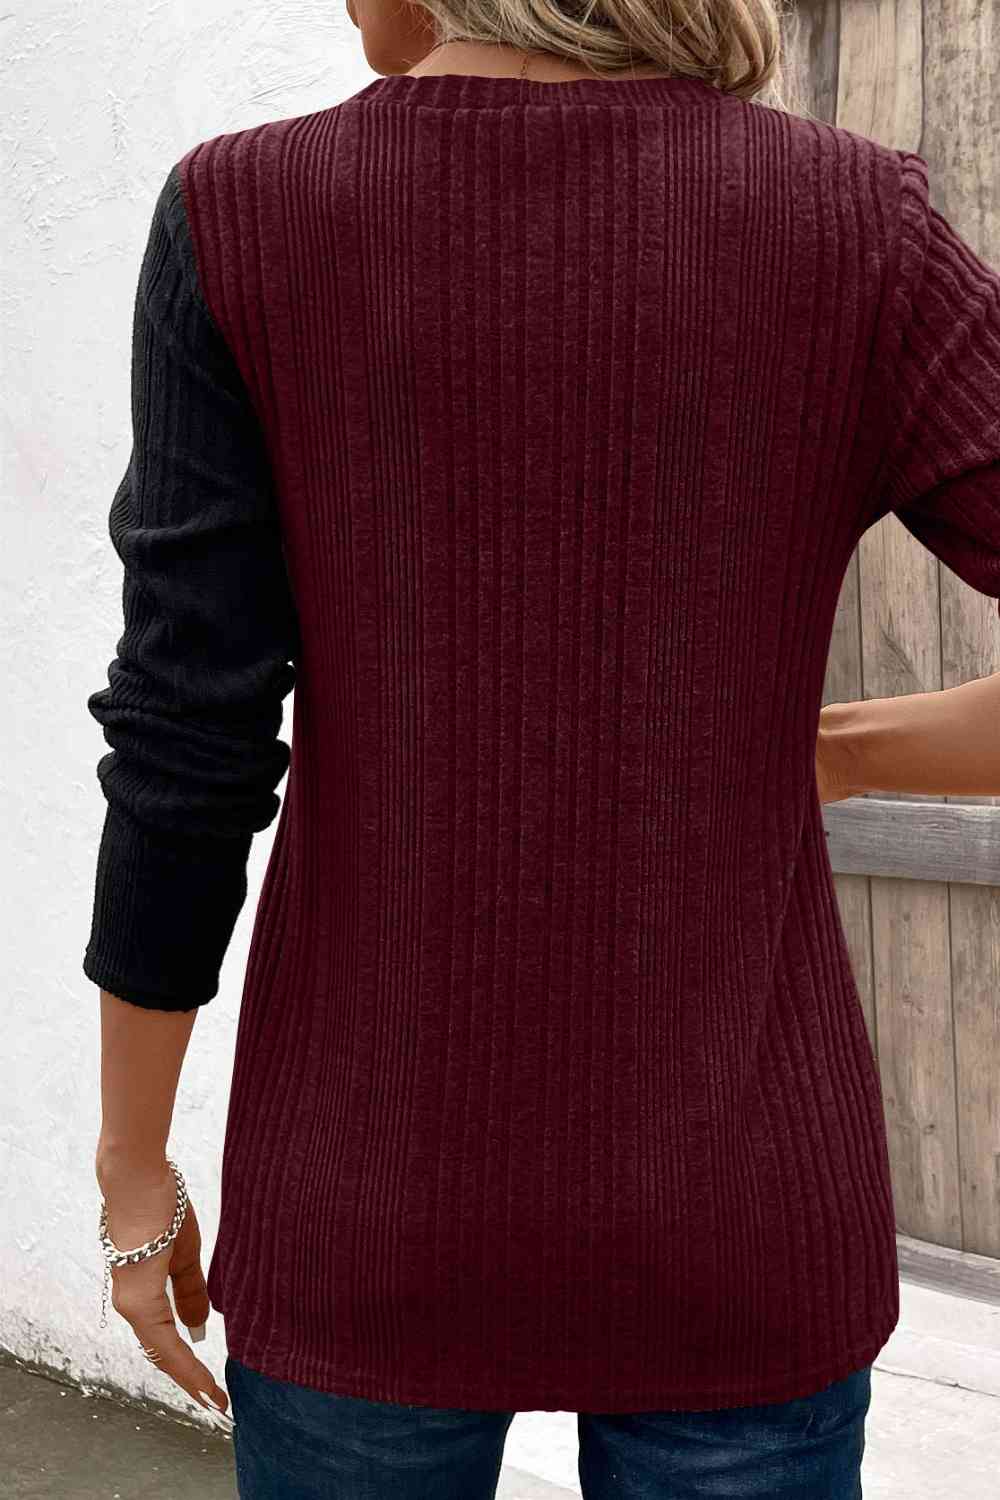 Contrast Color Long Sleeve Knit Top (6 Colors) Shirts & Tops Krazy Heart Designs Boutique   